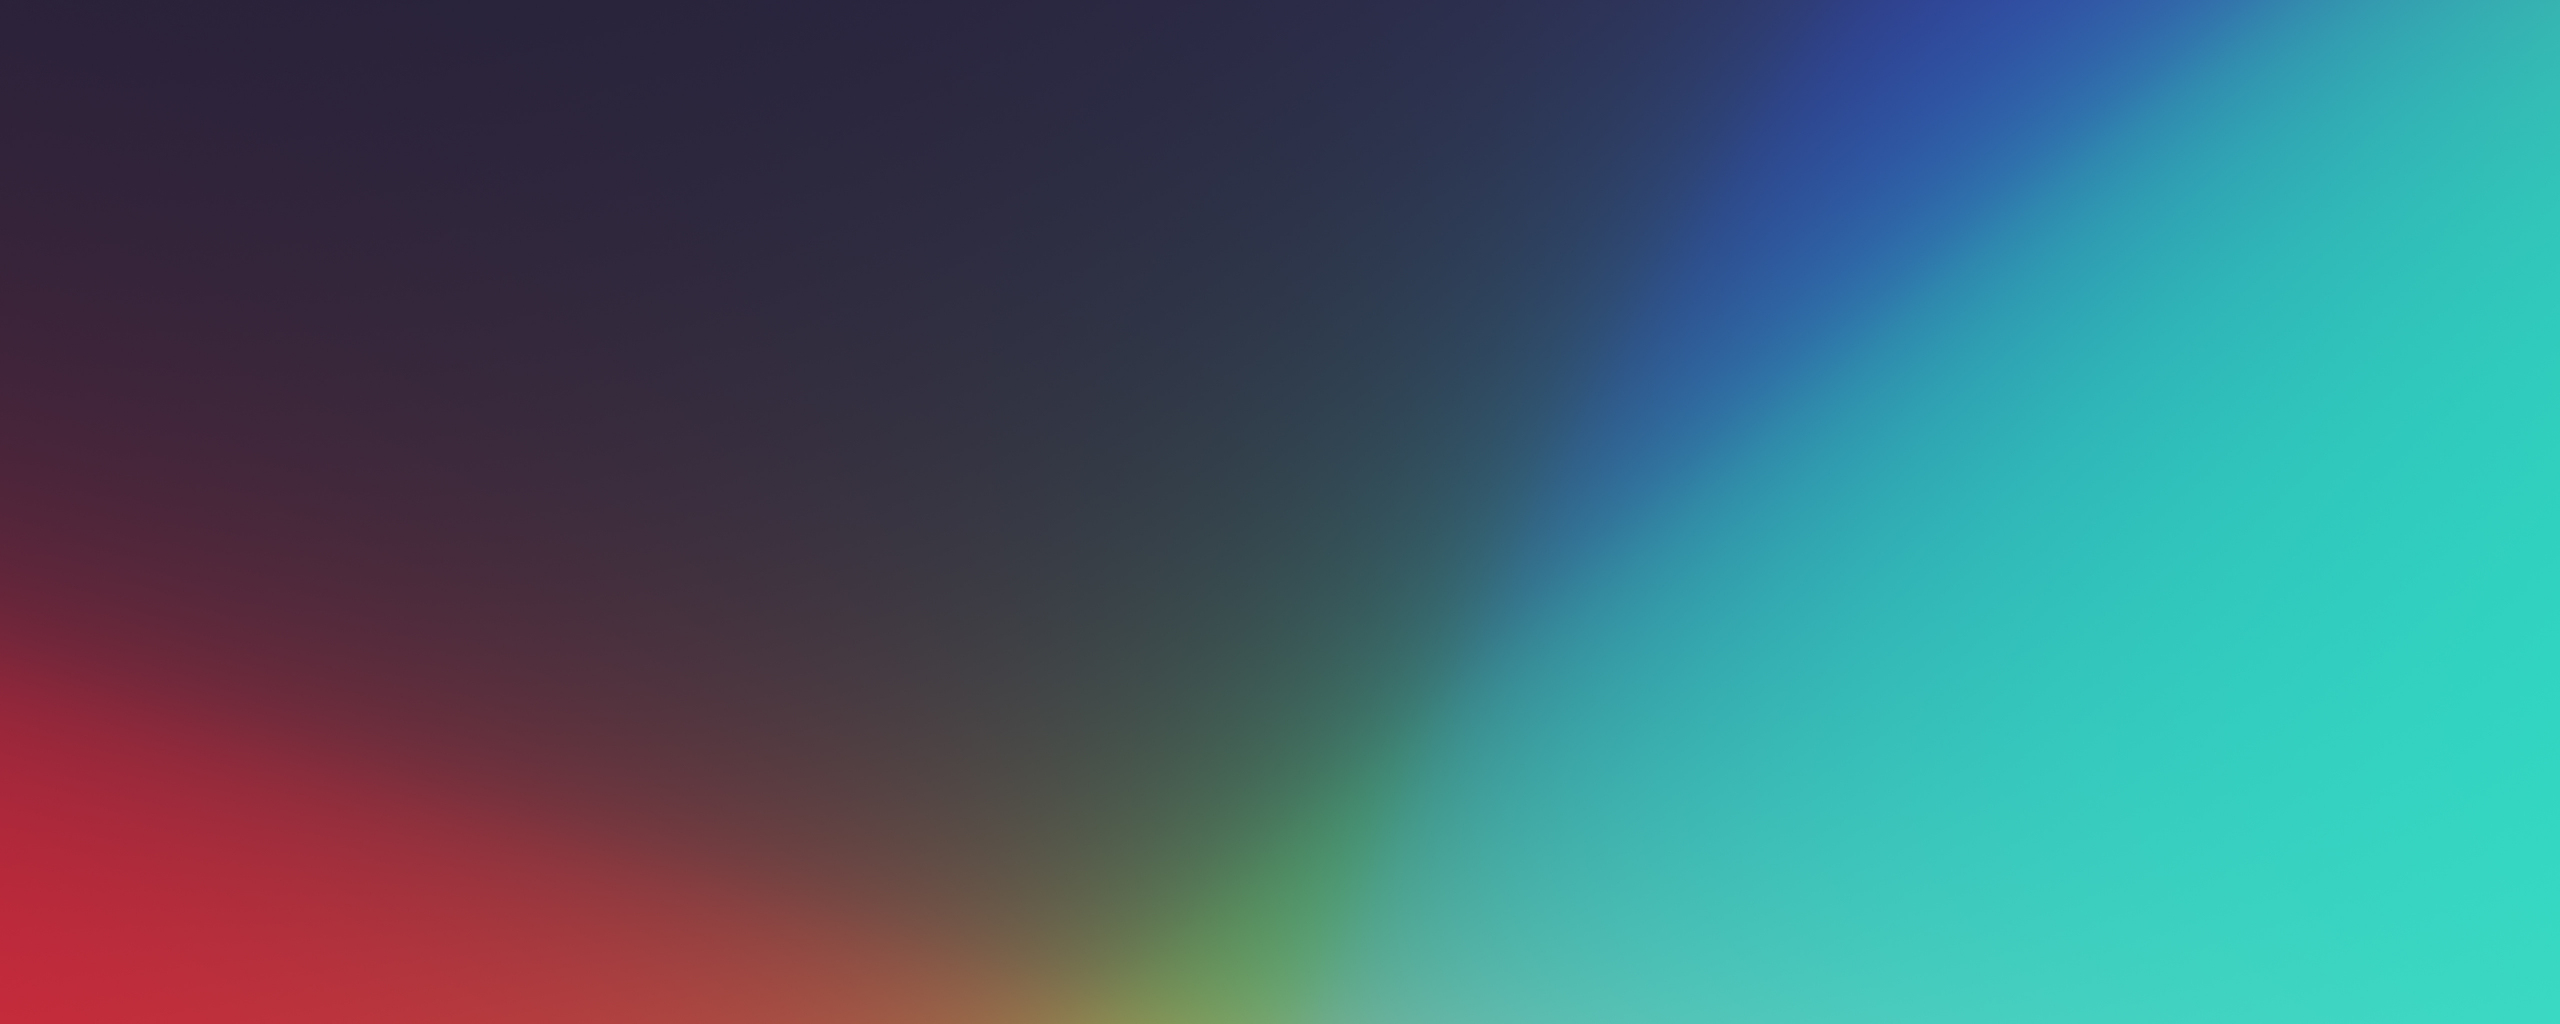 Download wallpaper 2560x1024 gradient, abstract, minimal, blur, dual ...